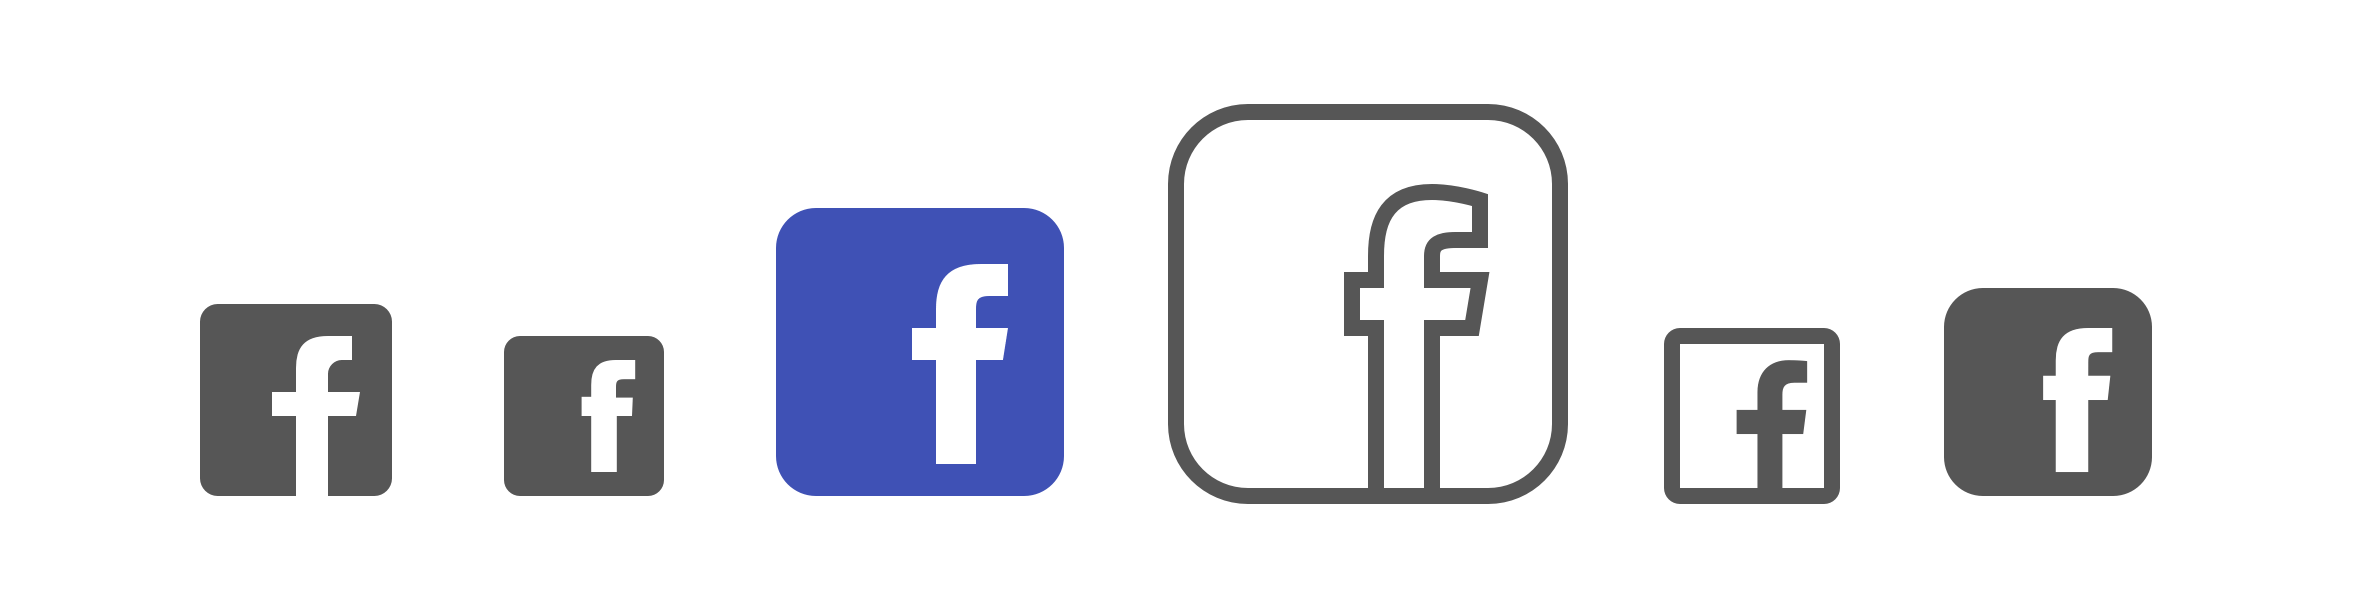 Facebook Logo - Facebook Icon download, PNG and vector